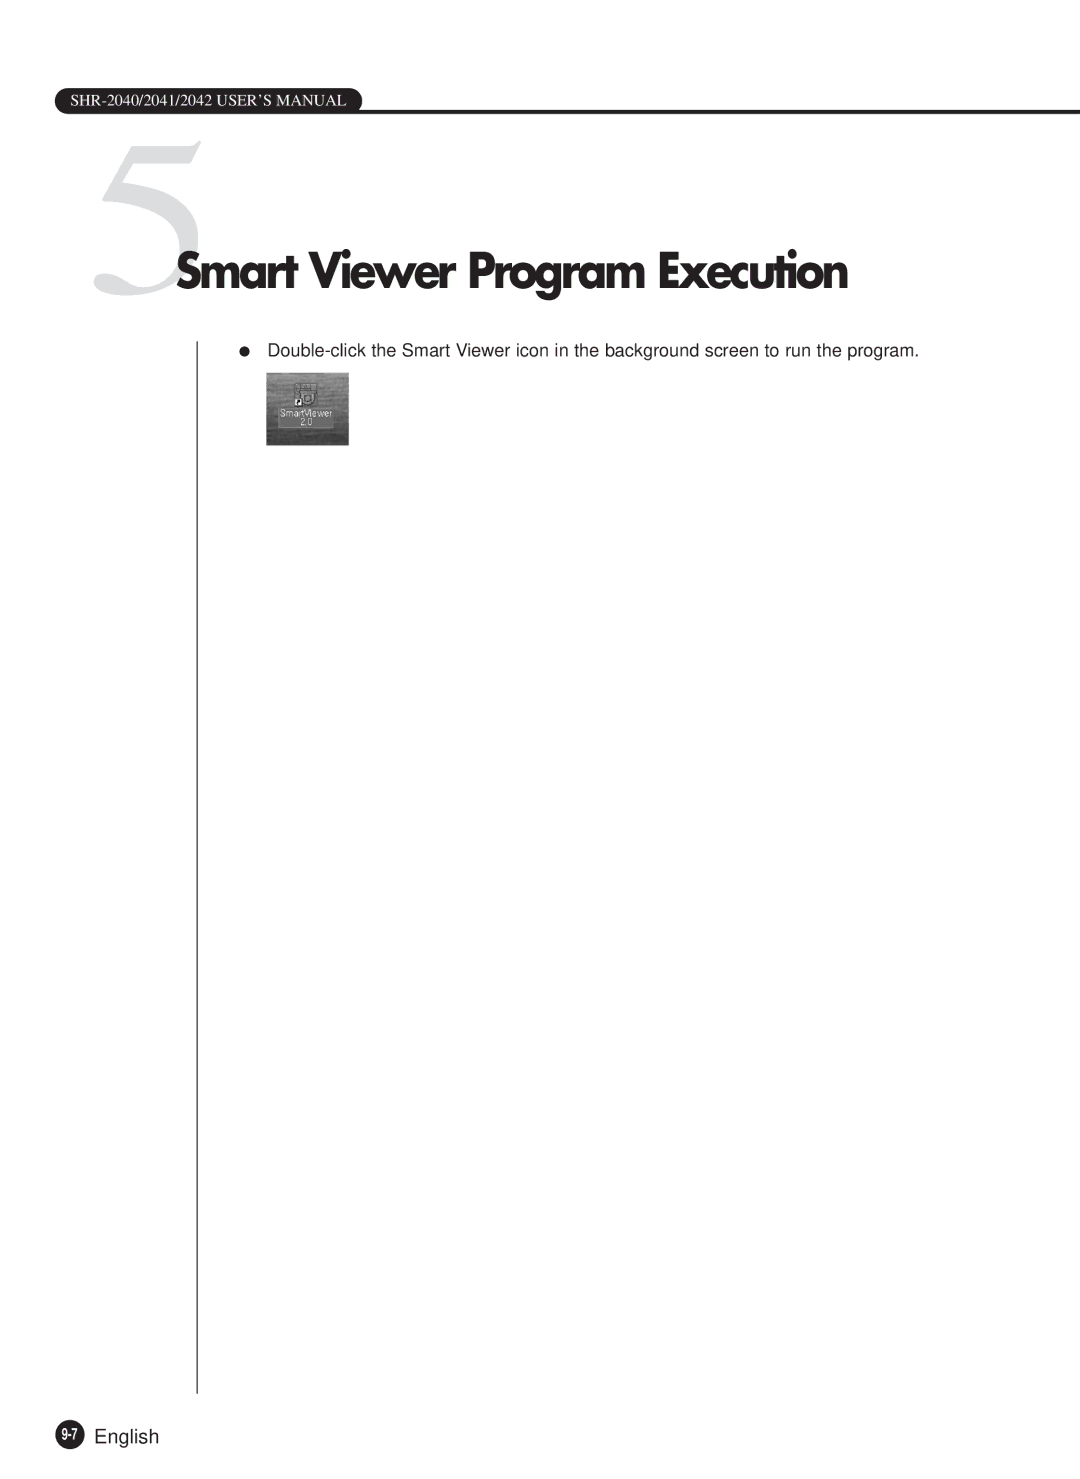 Samsung SHR-2040N, SHR-2040P manual 5Smart Viewer Program Execution, 7English 